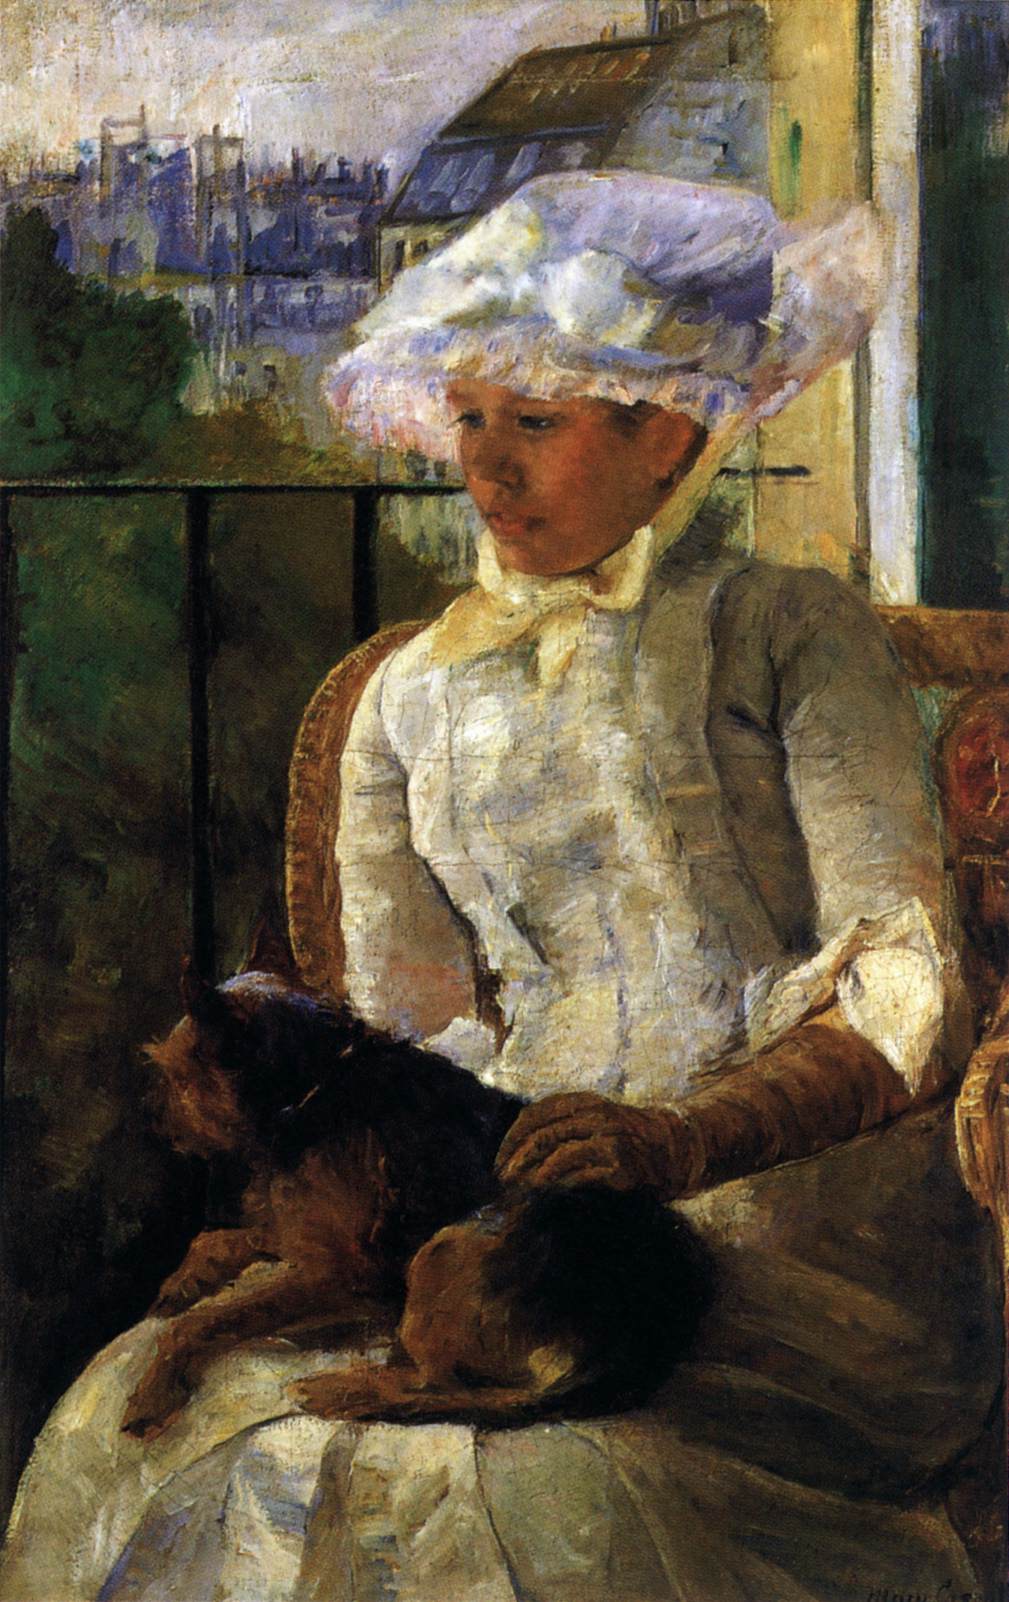 Susana på en balkong som håller en hund